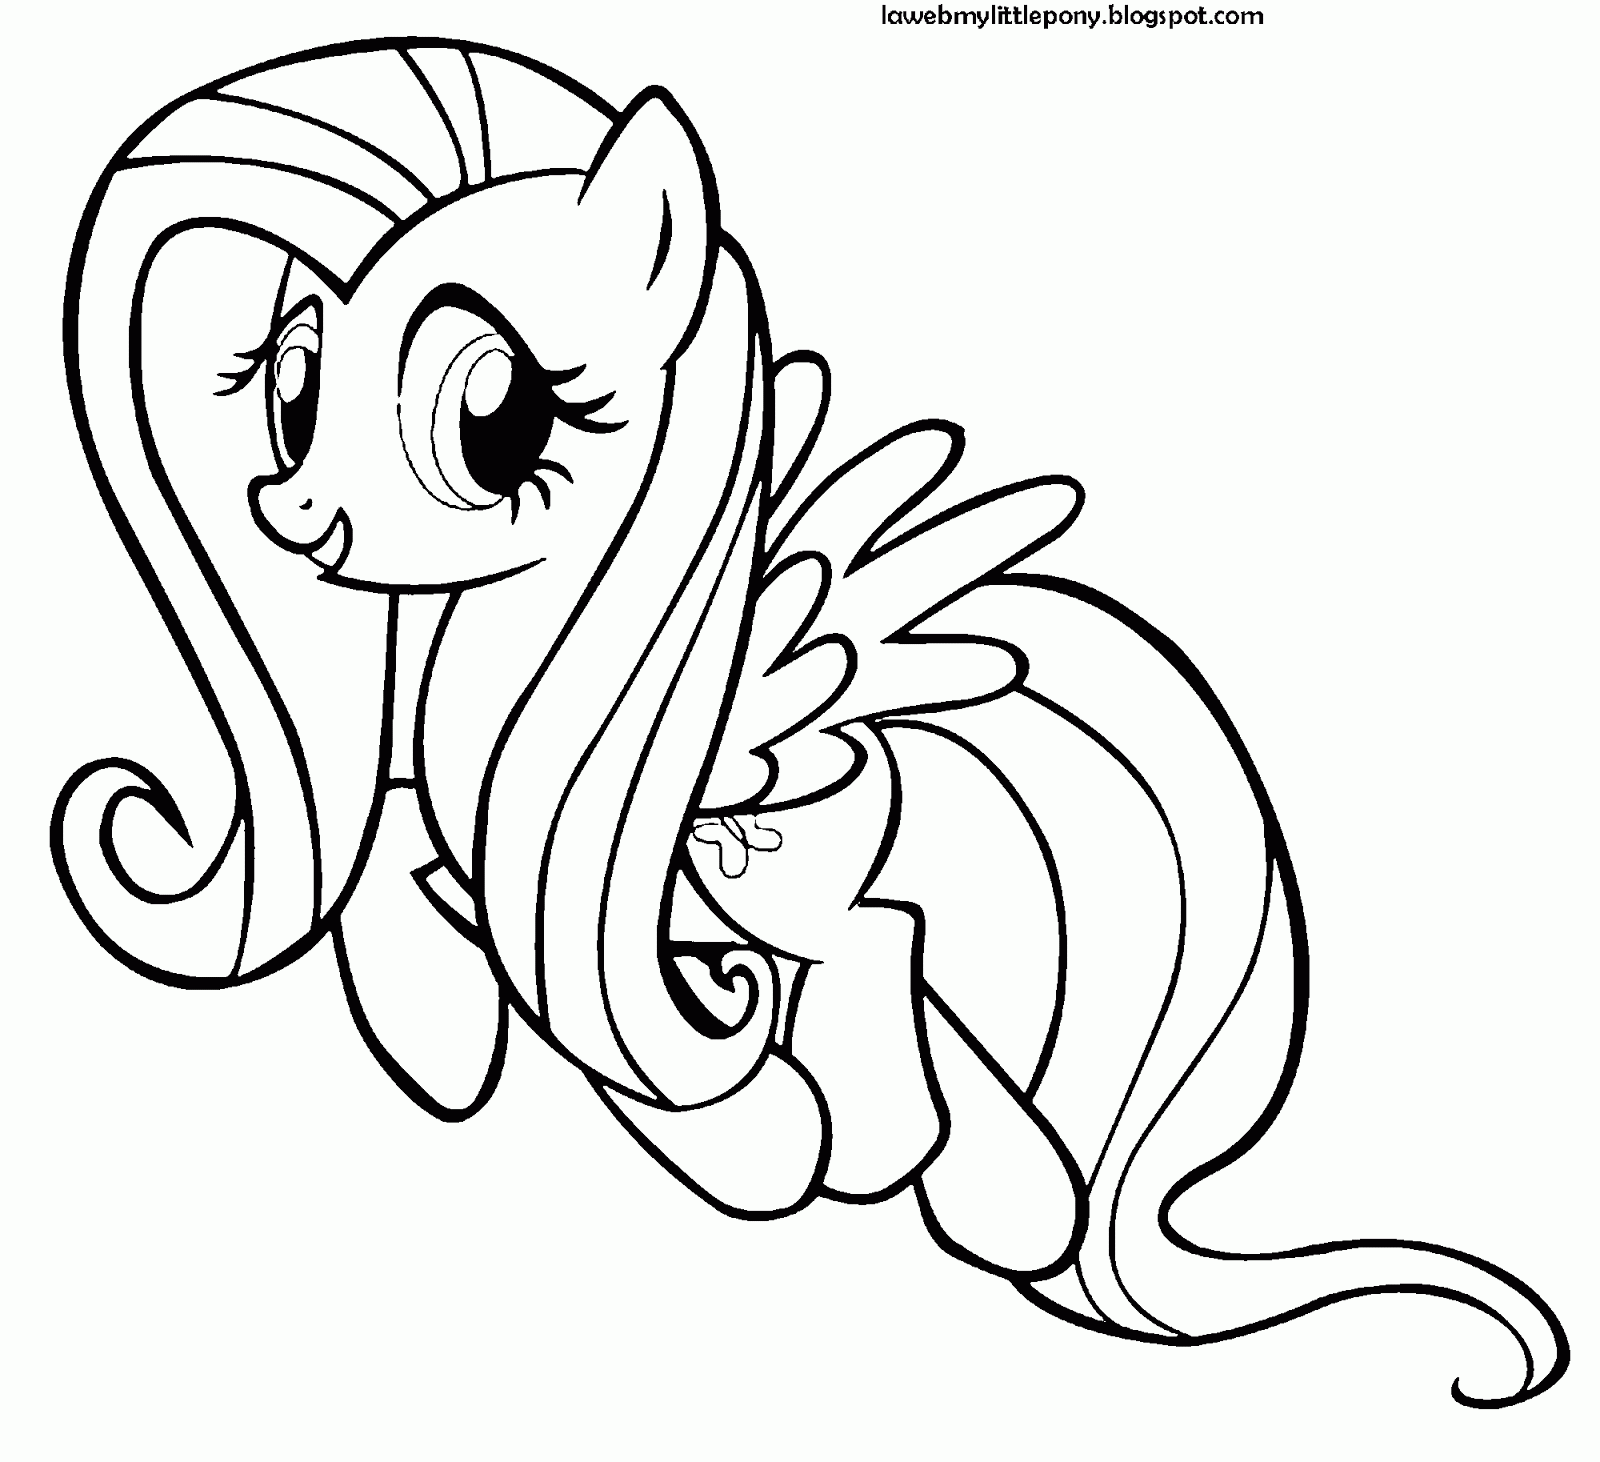 Imagenes De My Little Pony Para Dibujar Faciles Imagesacolorier